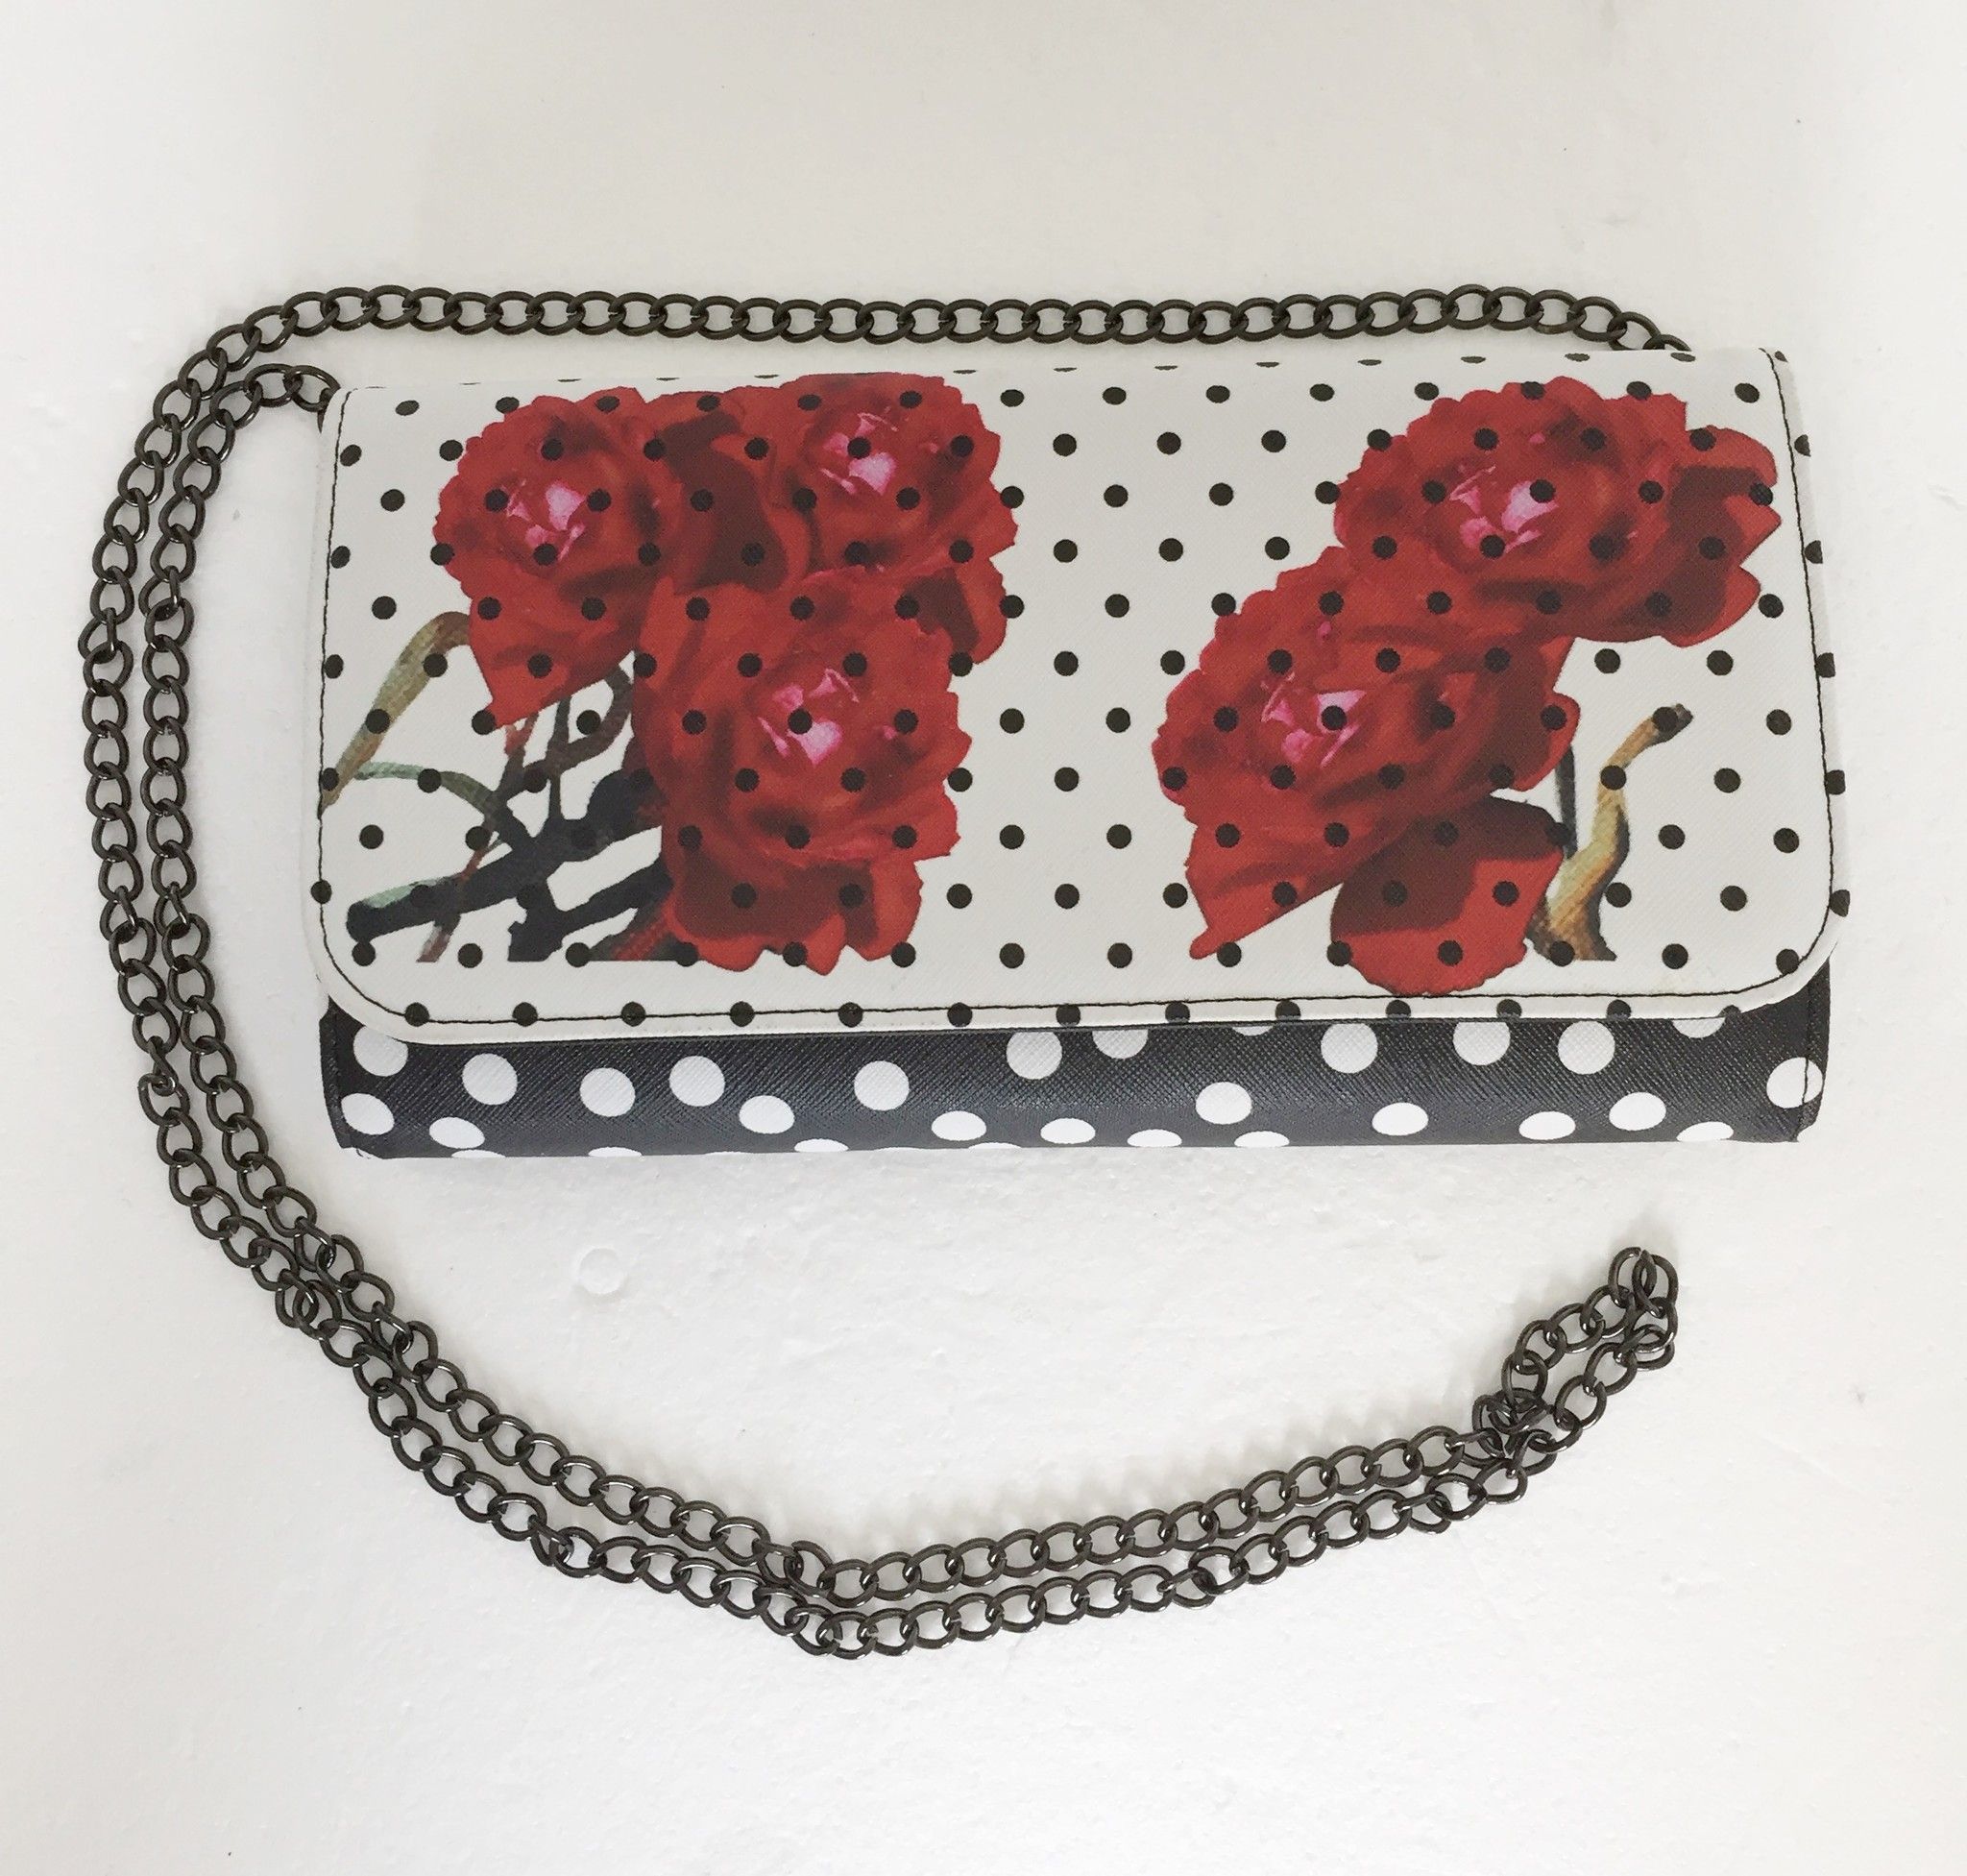 LadyBug clutch bag and flowers with metallic strap Cod.5625